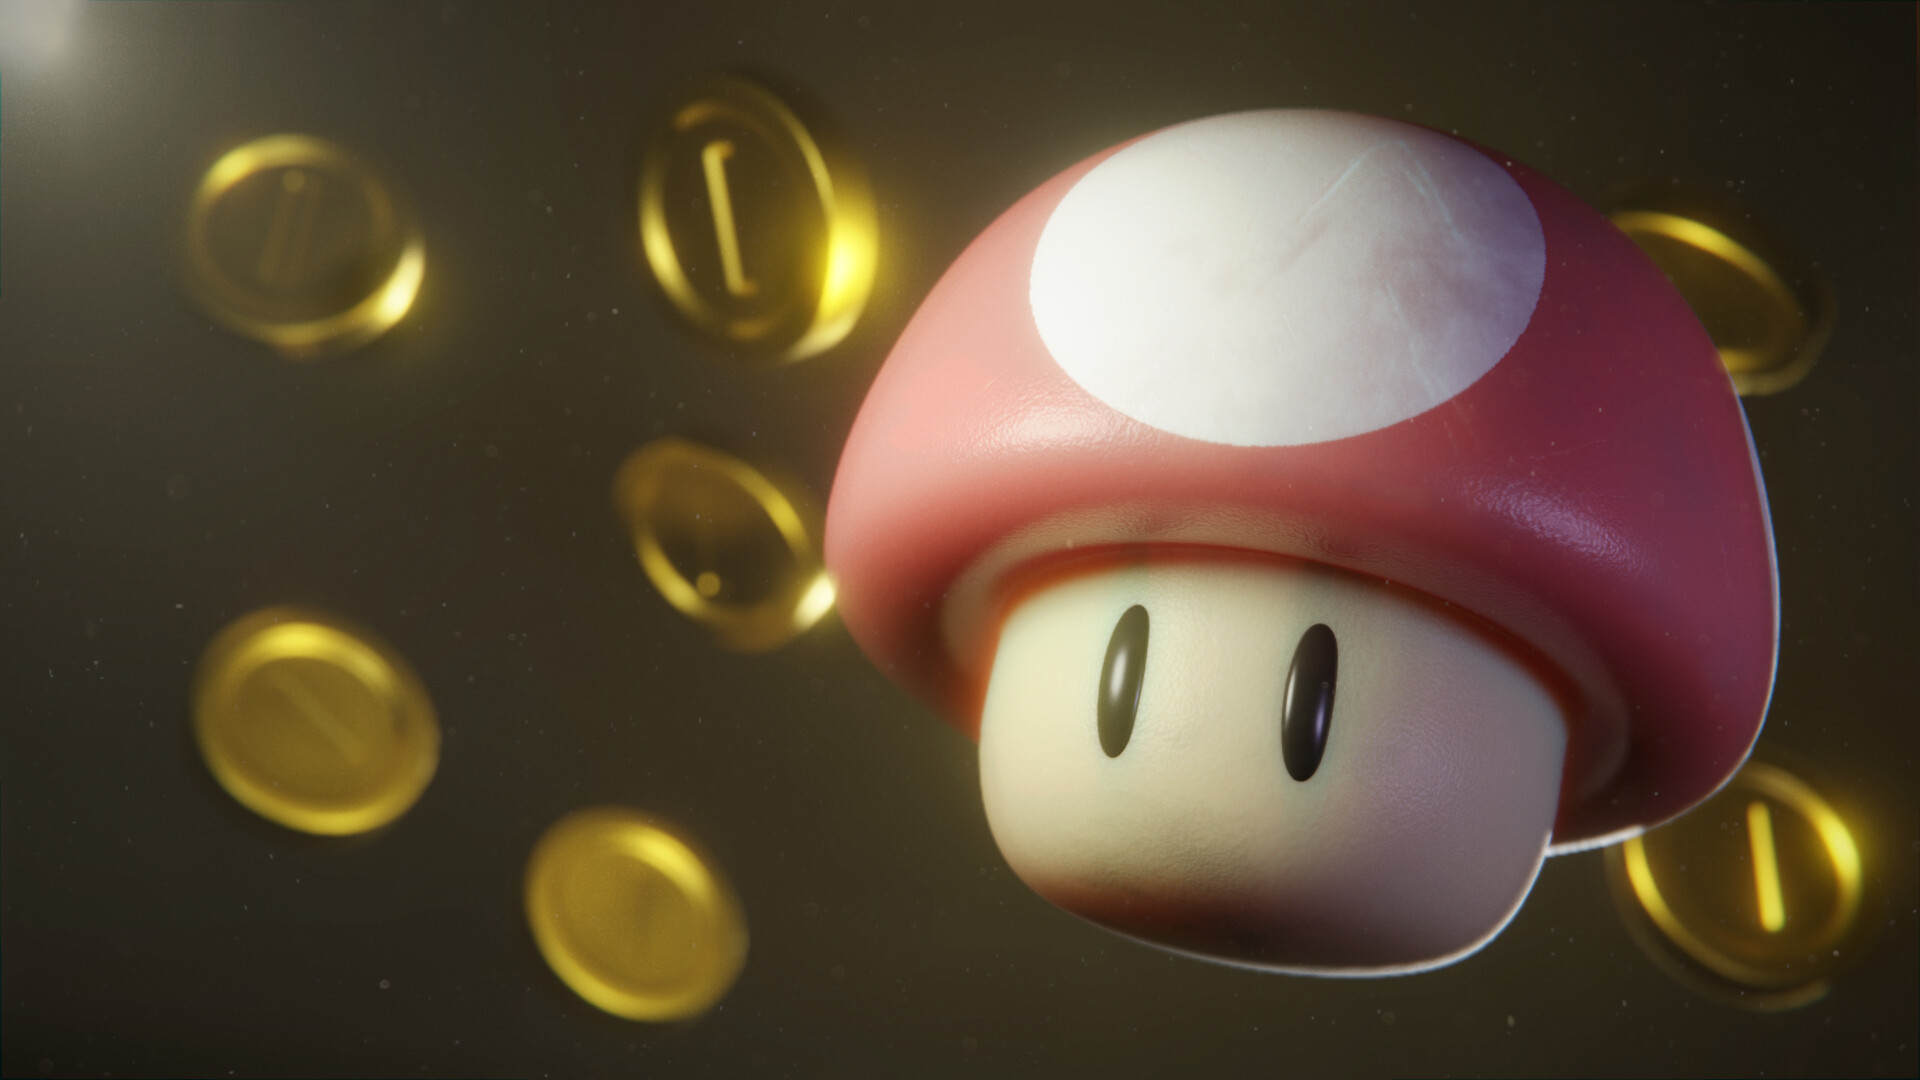 Mario Mushroom Background